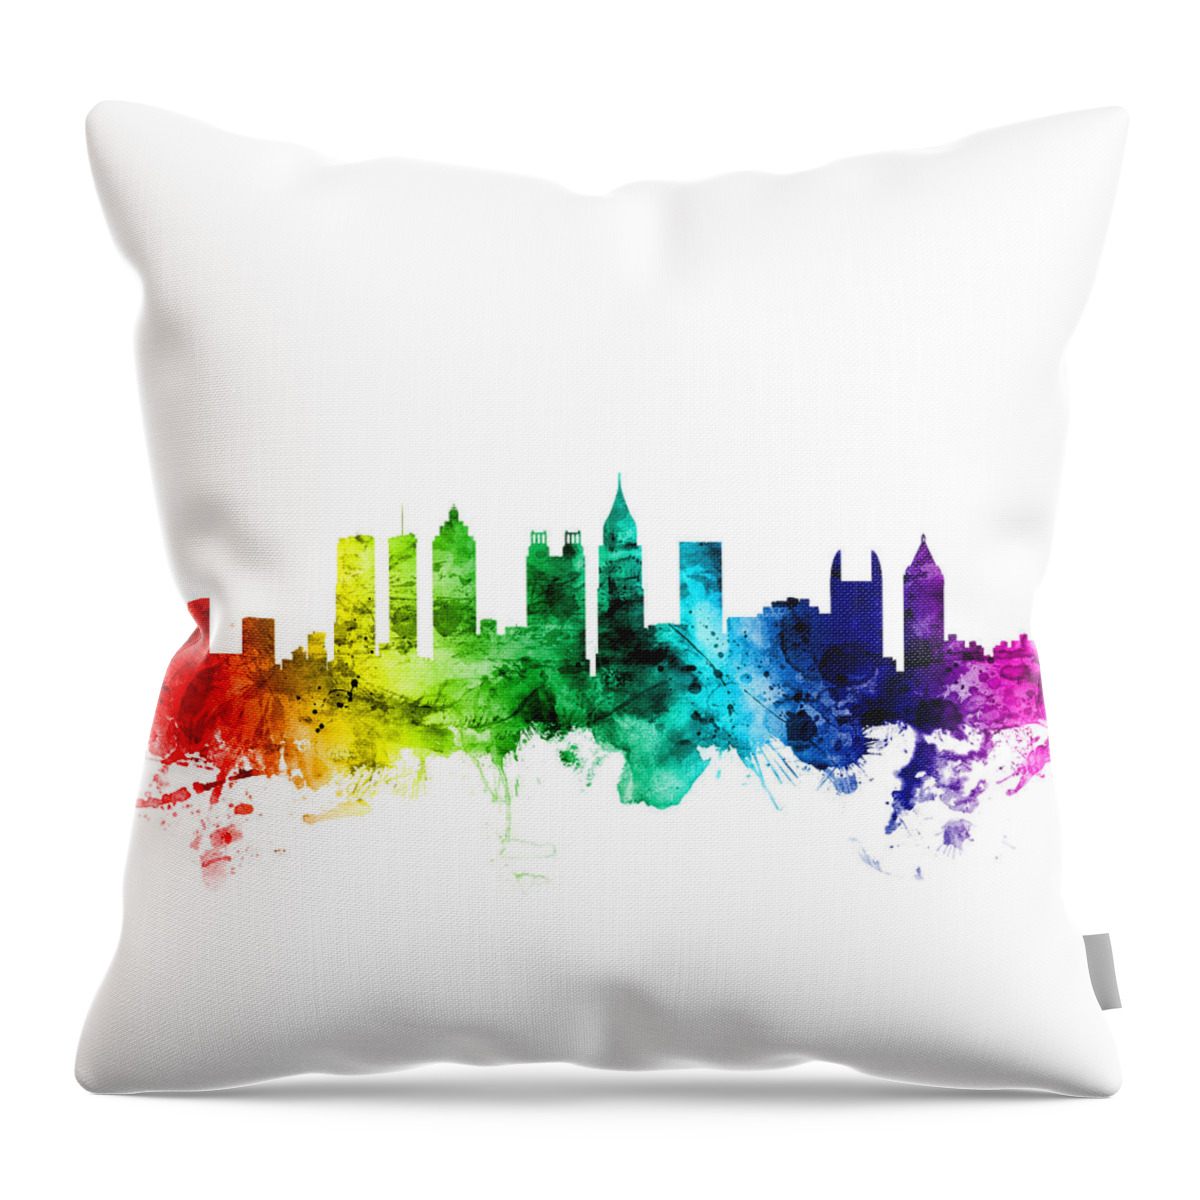 United States Throw Pillow featuring the digital art Atlanta Georgia Skyline by Michael Tompsett